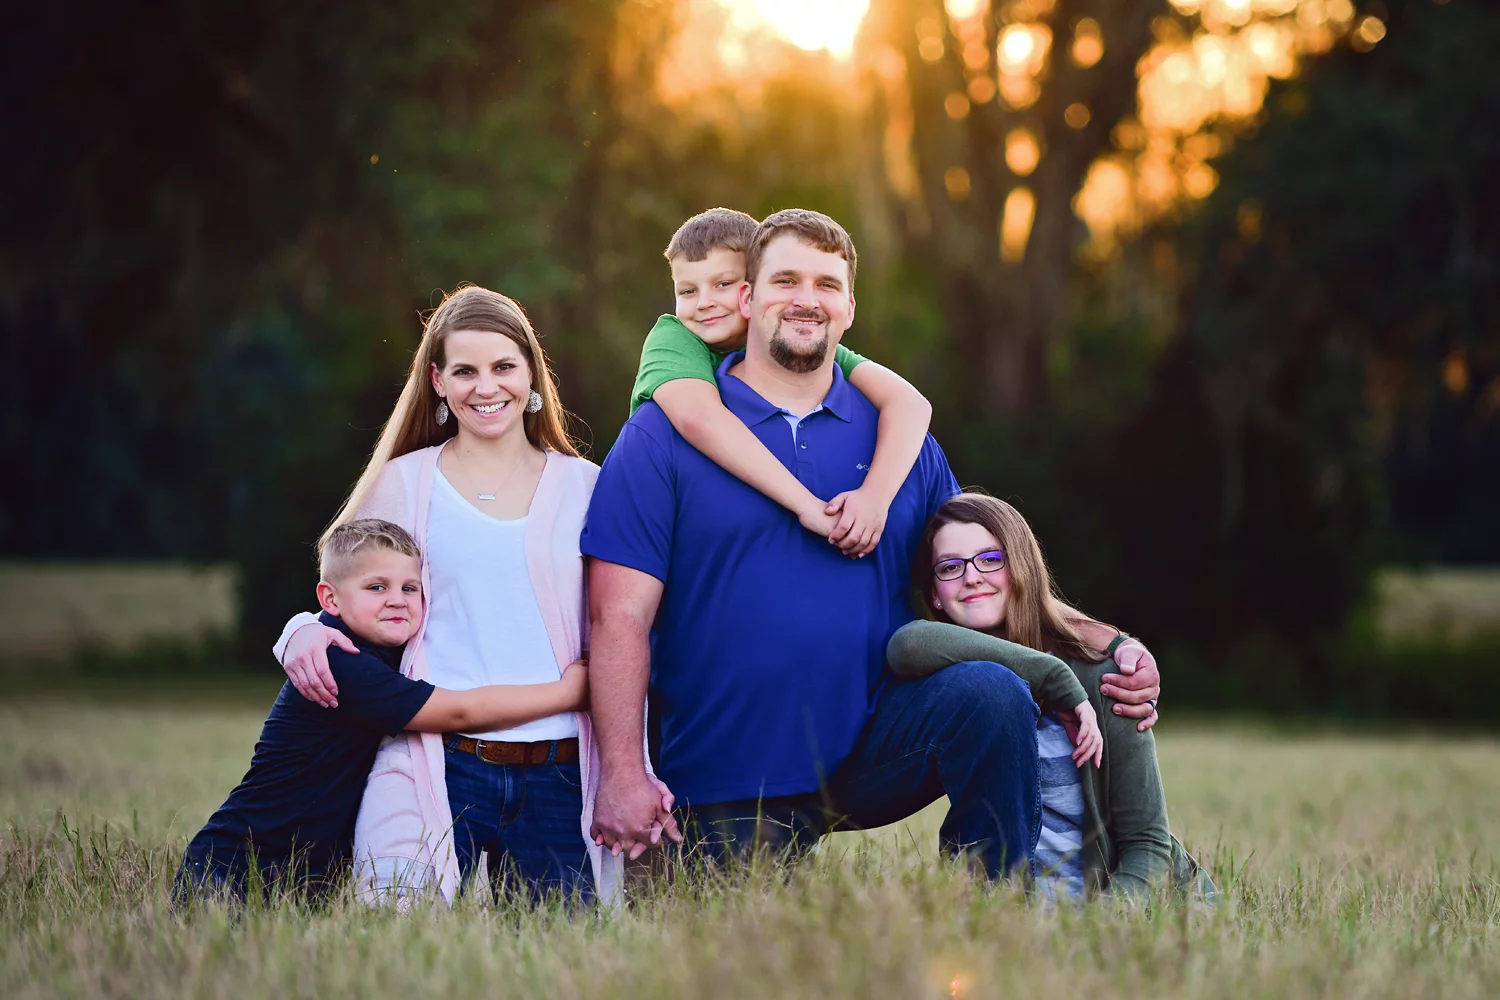 Family portrait photo taken by Lisa Rowland Photography in Trenton, Florida